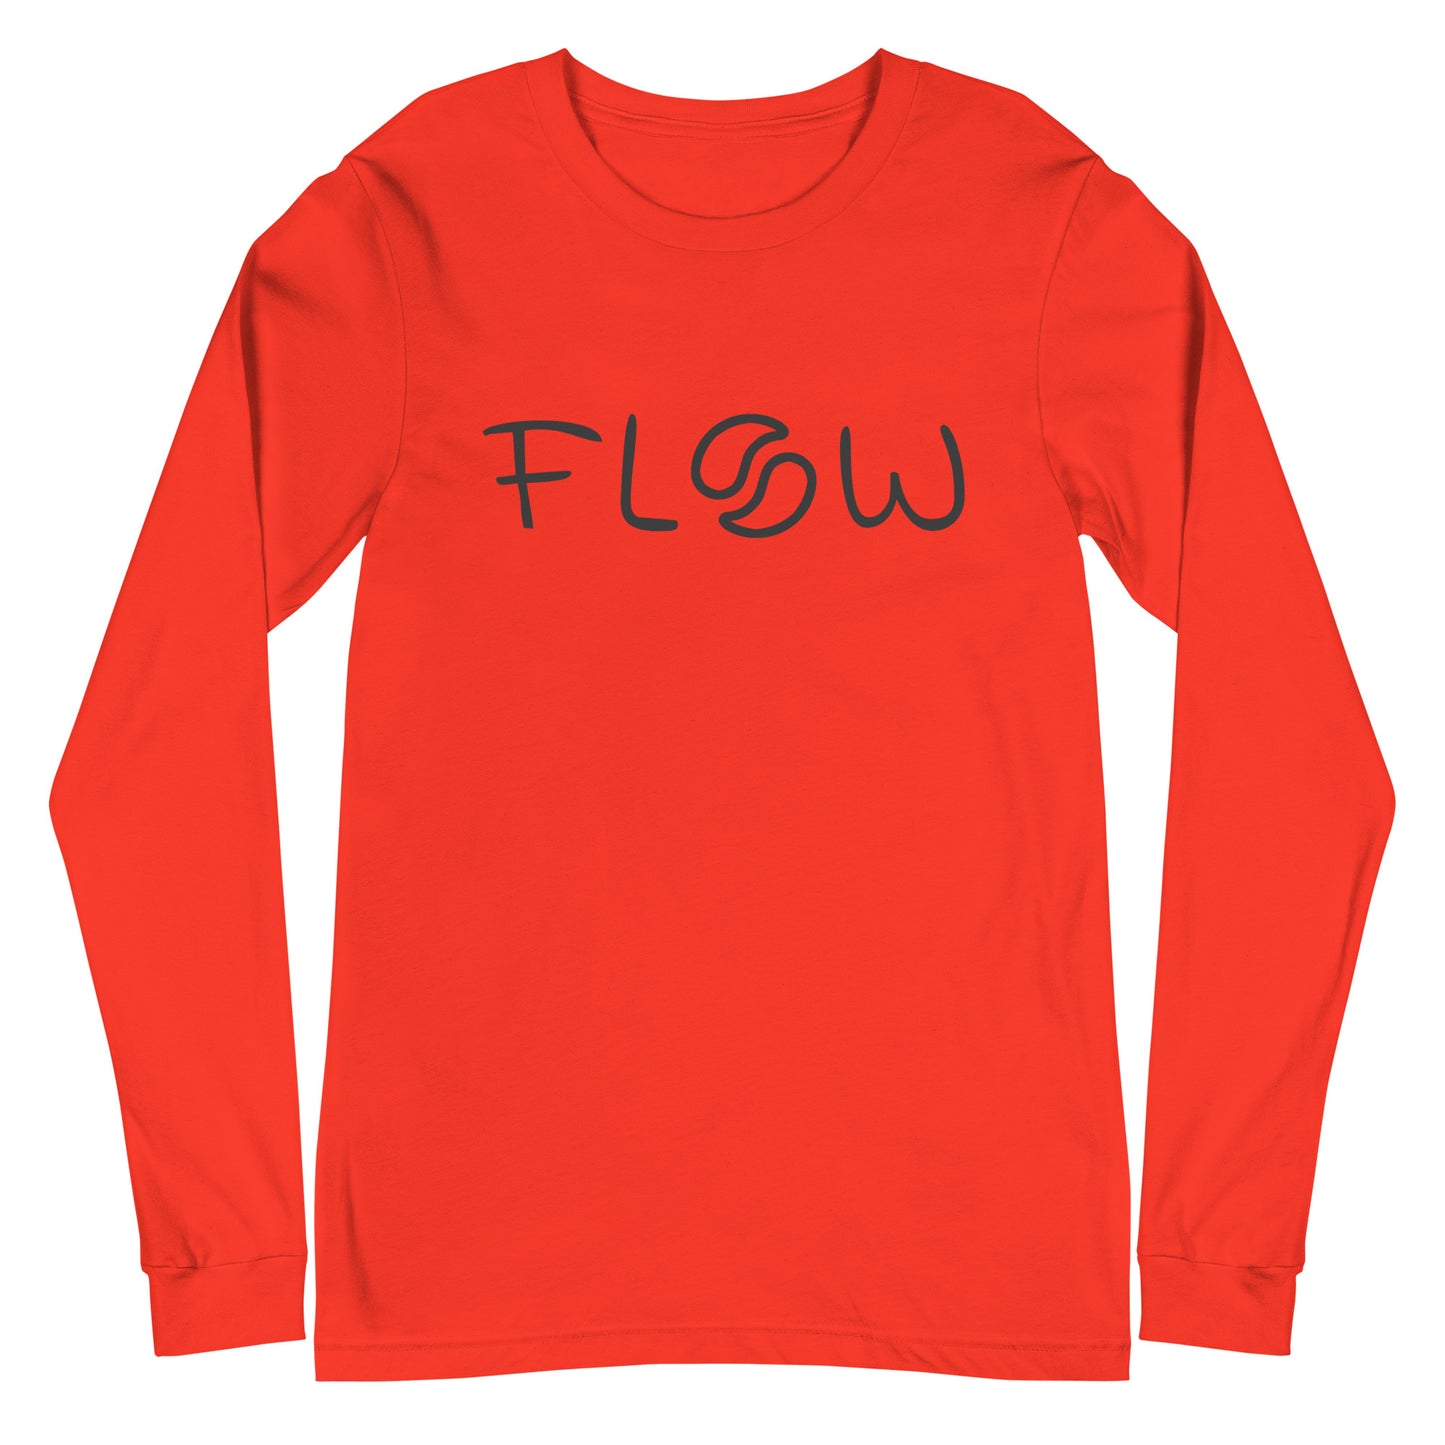 Flow Long-Sleeve Tee Poppy